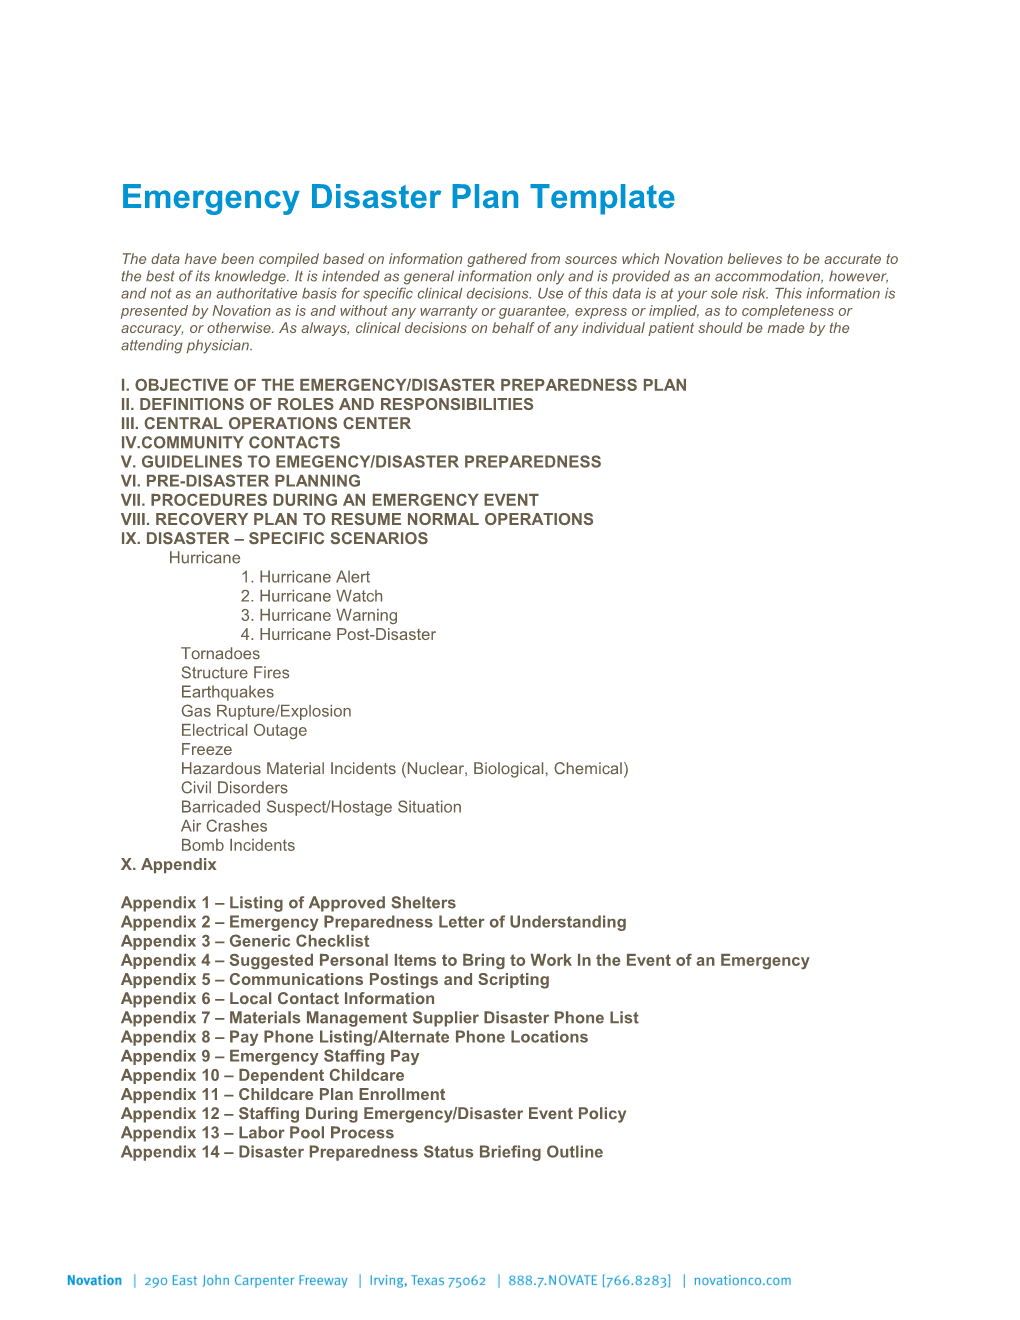 Emergency/Disaster Preparedness Plan